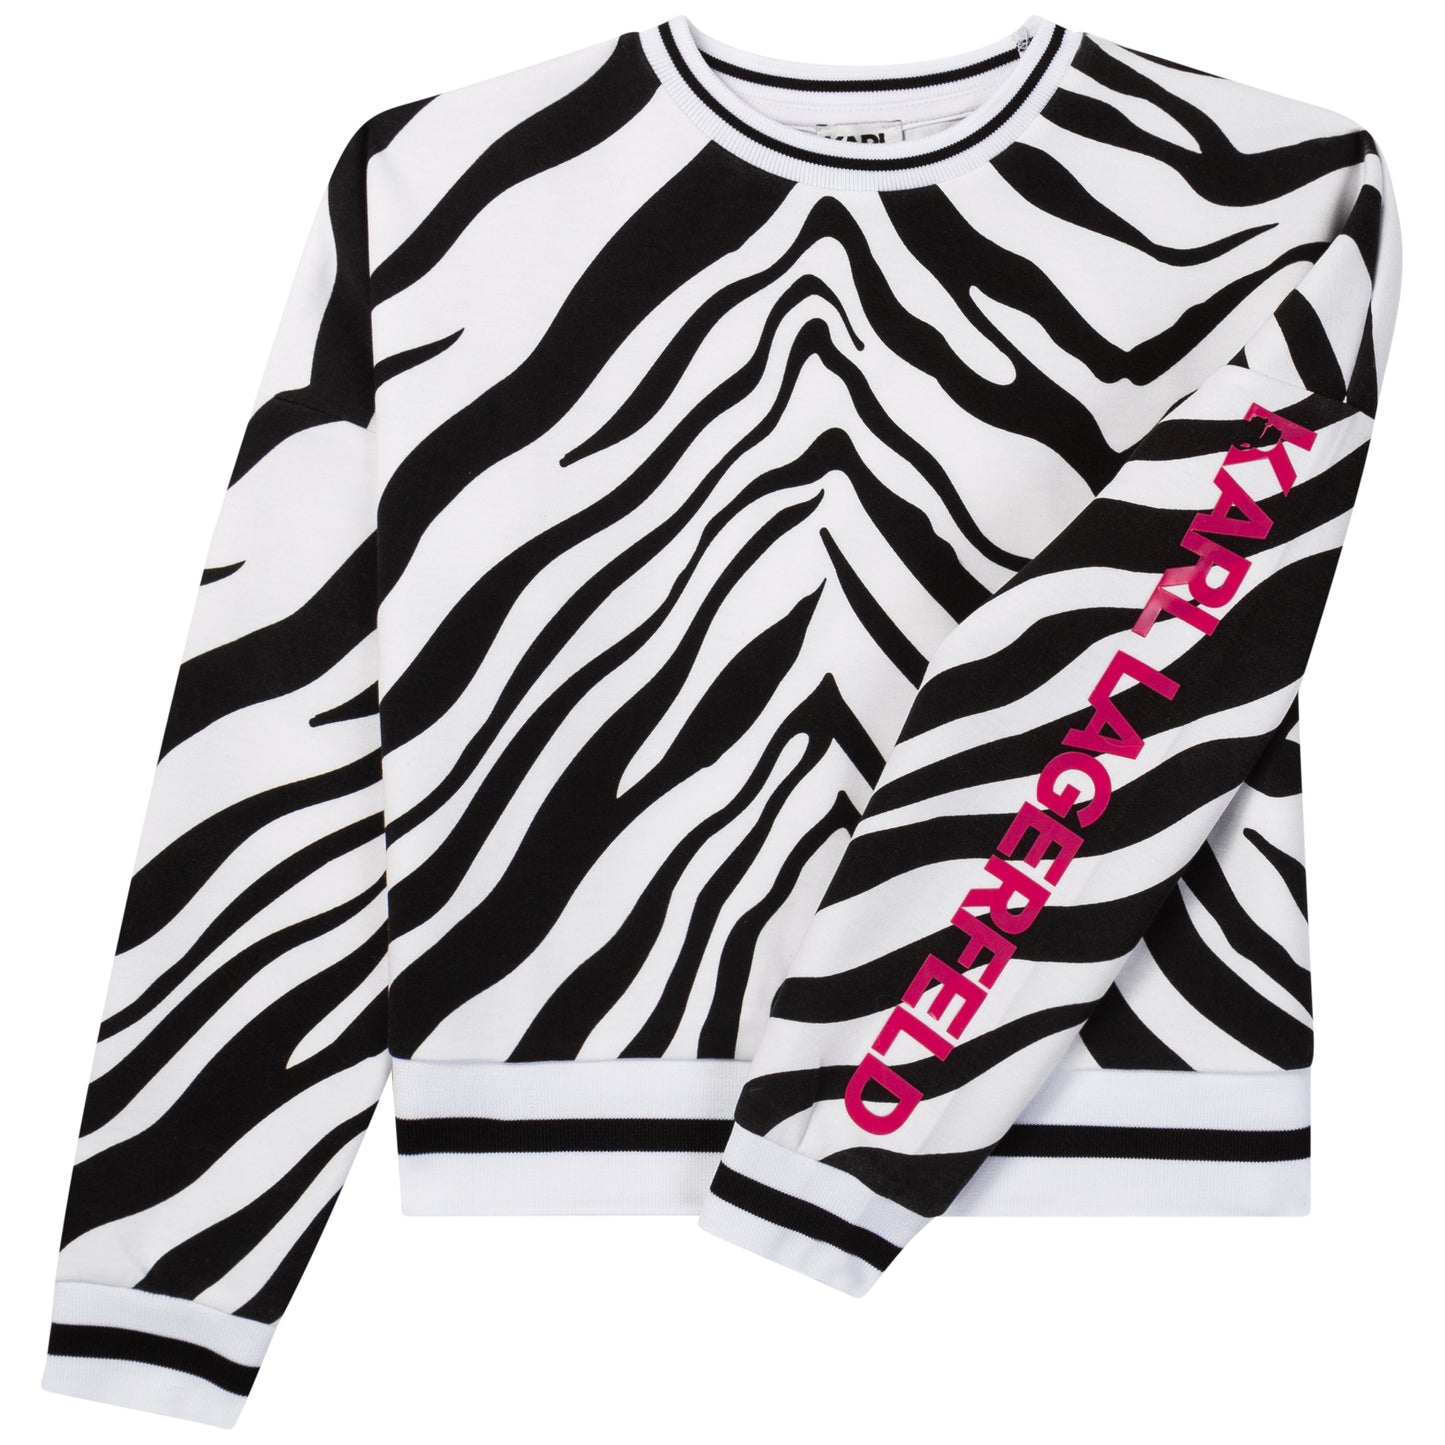 Karl Lagerfeld Zebra Sweatshirt